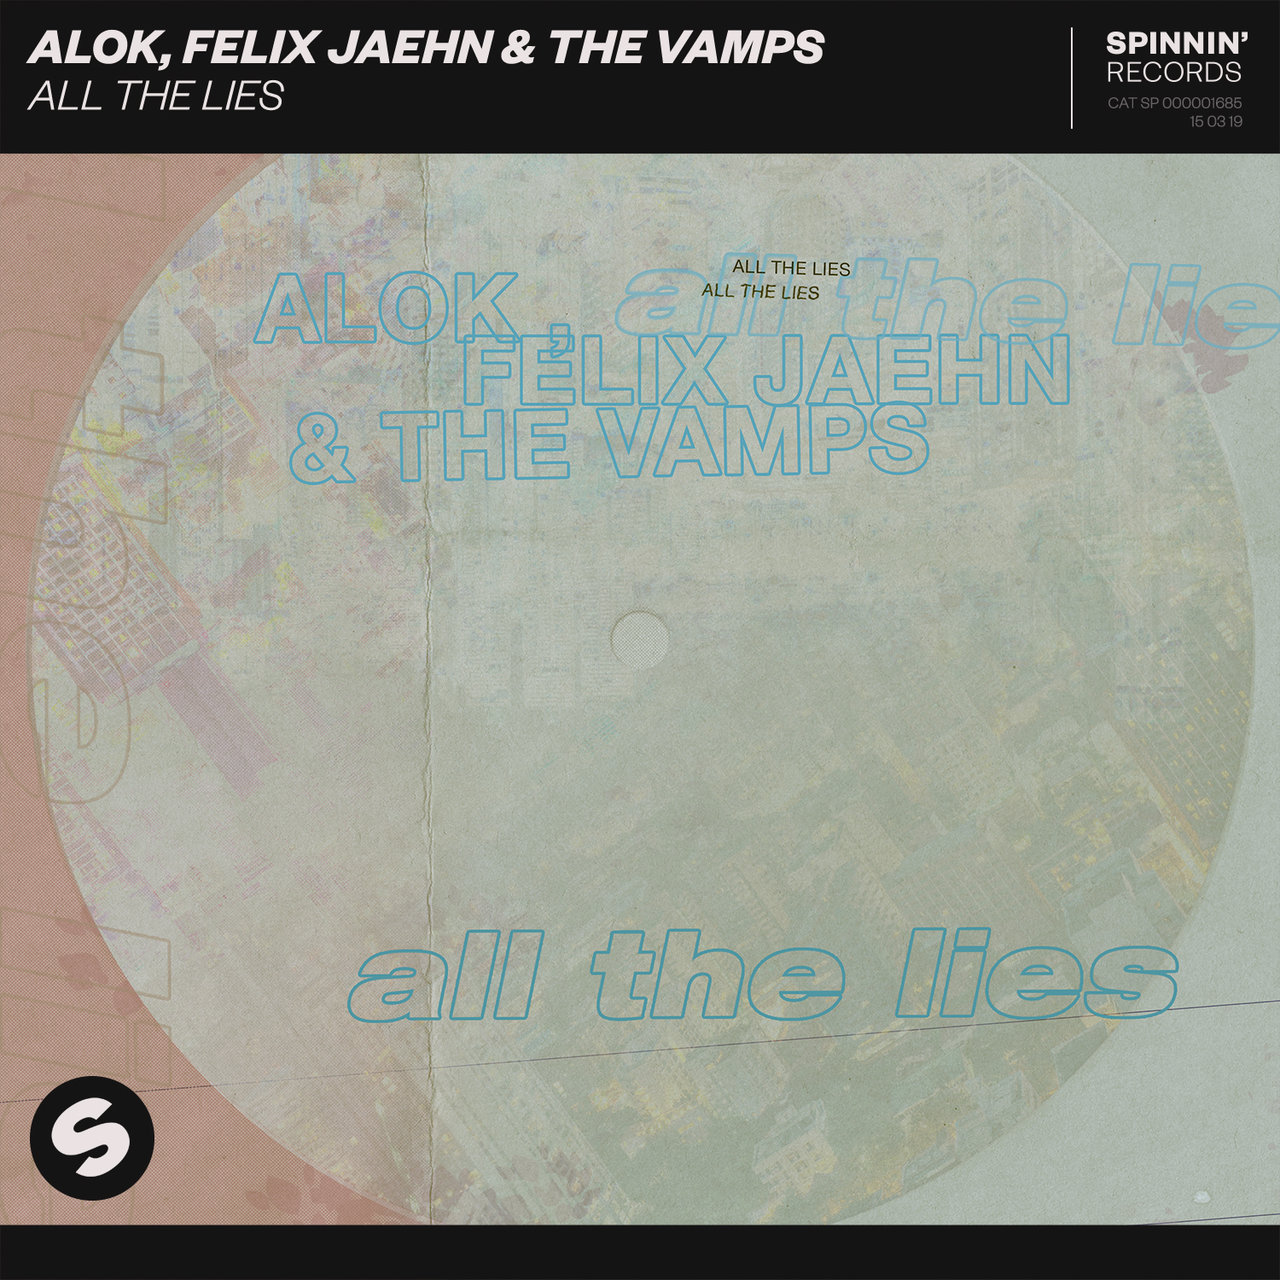 Alok, Felix Jaehn, & The Vamps All the Lies cover artwork